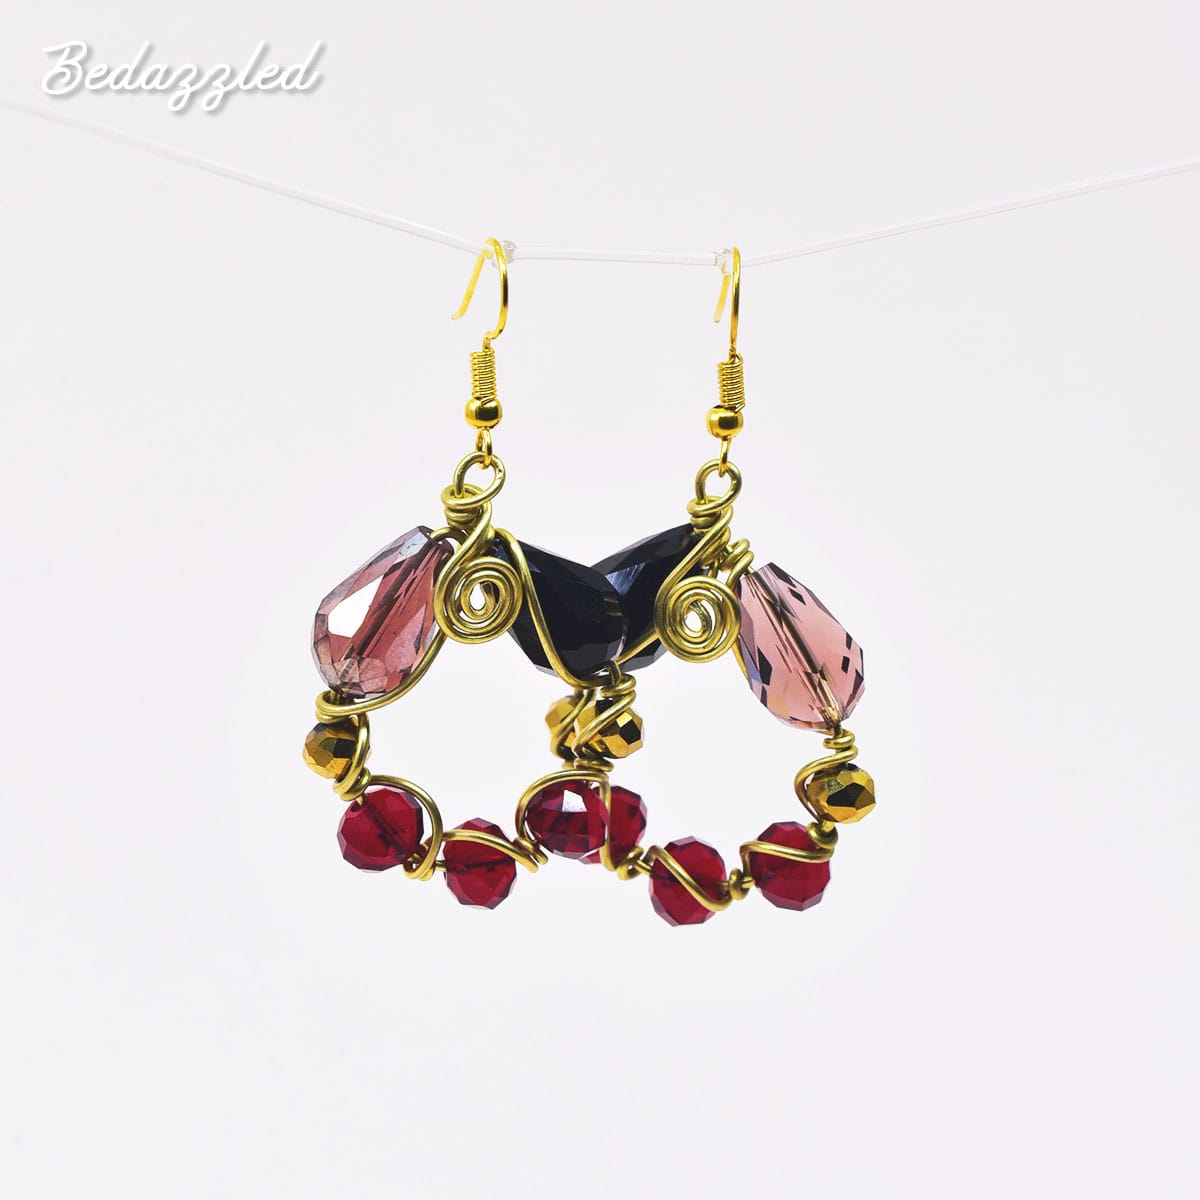 Bejeweled Style 3 - Earrings